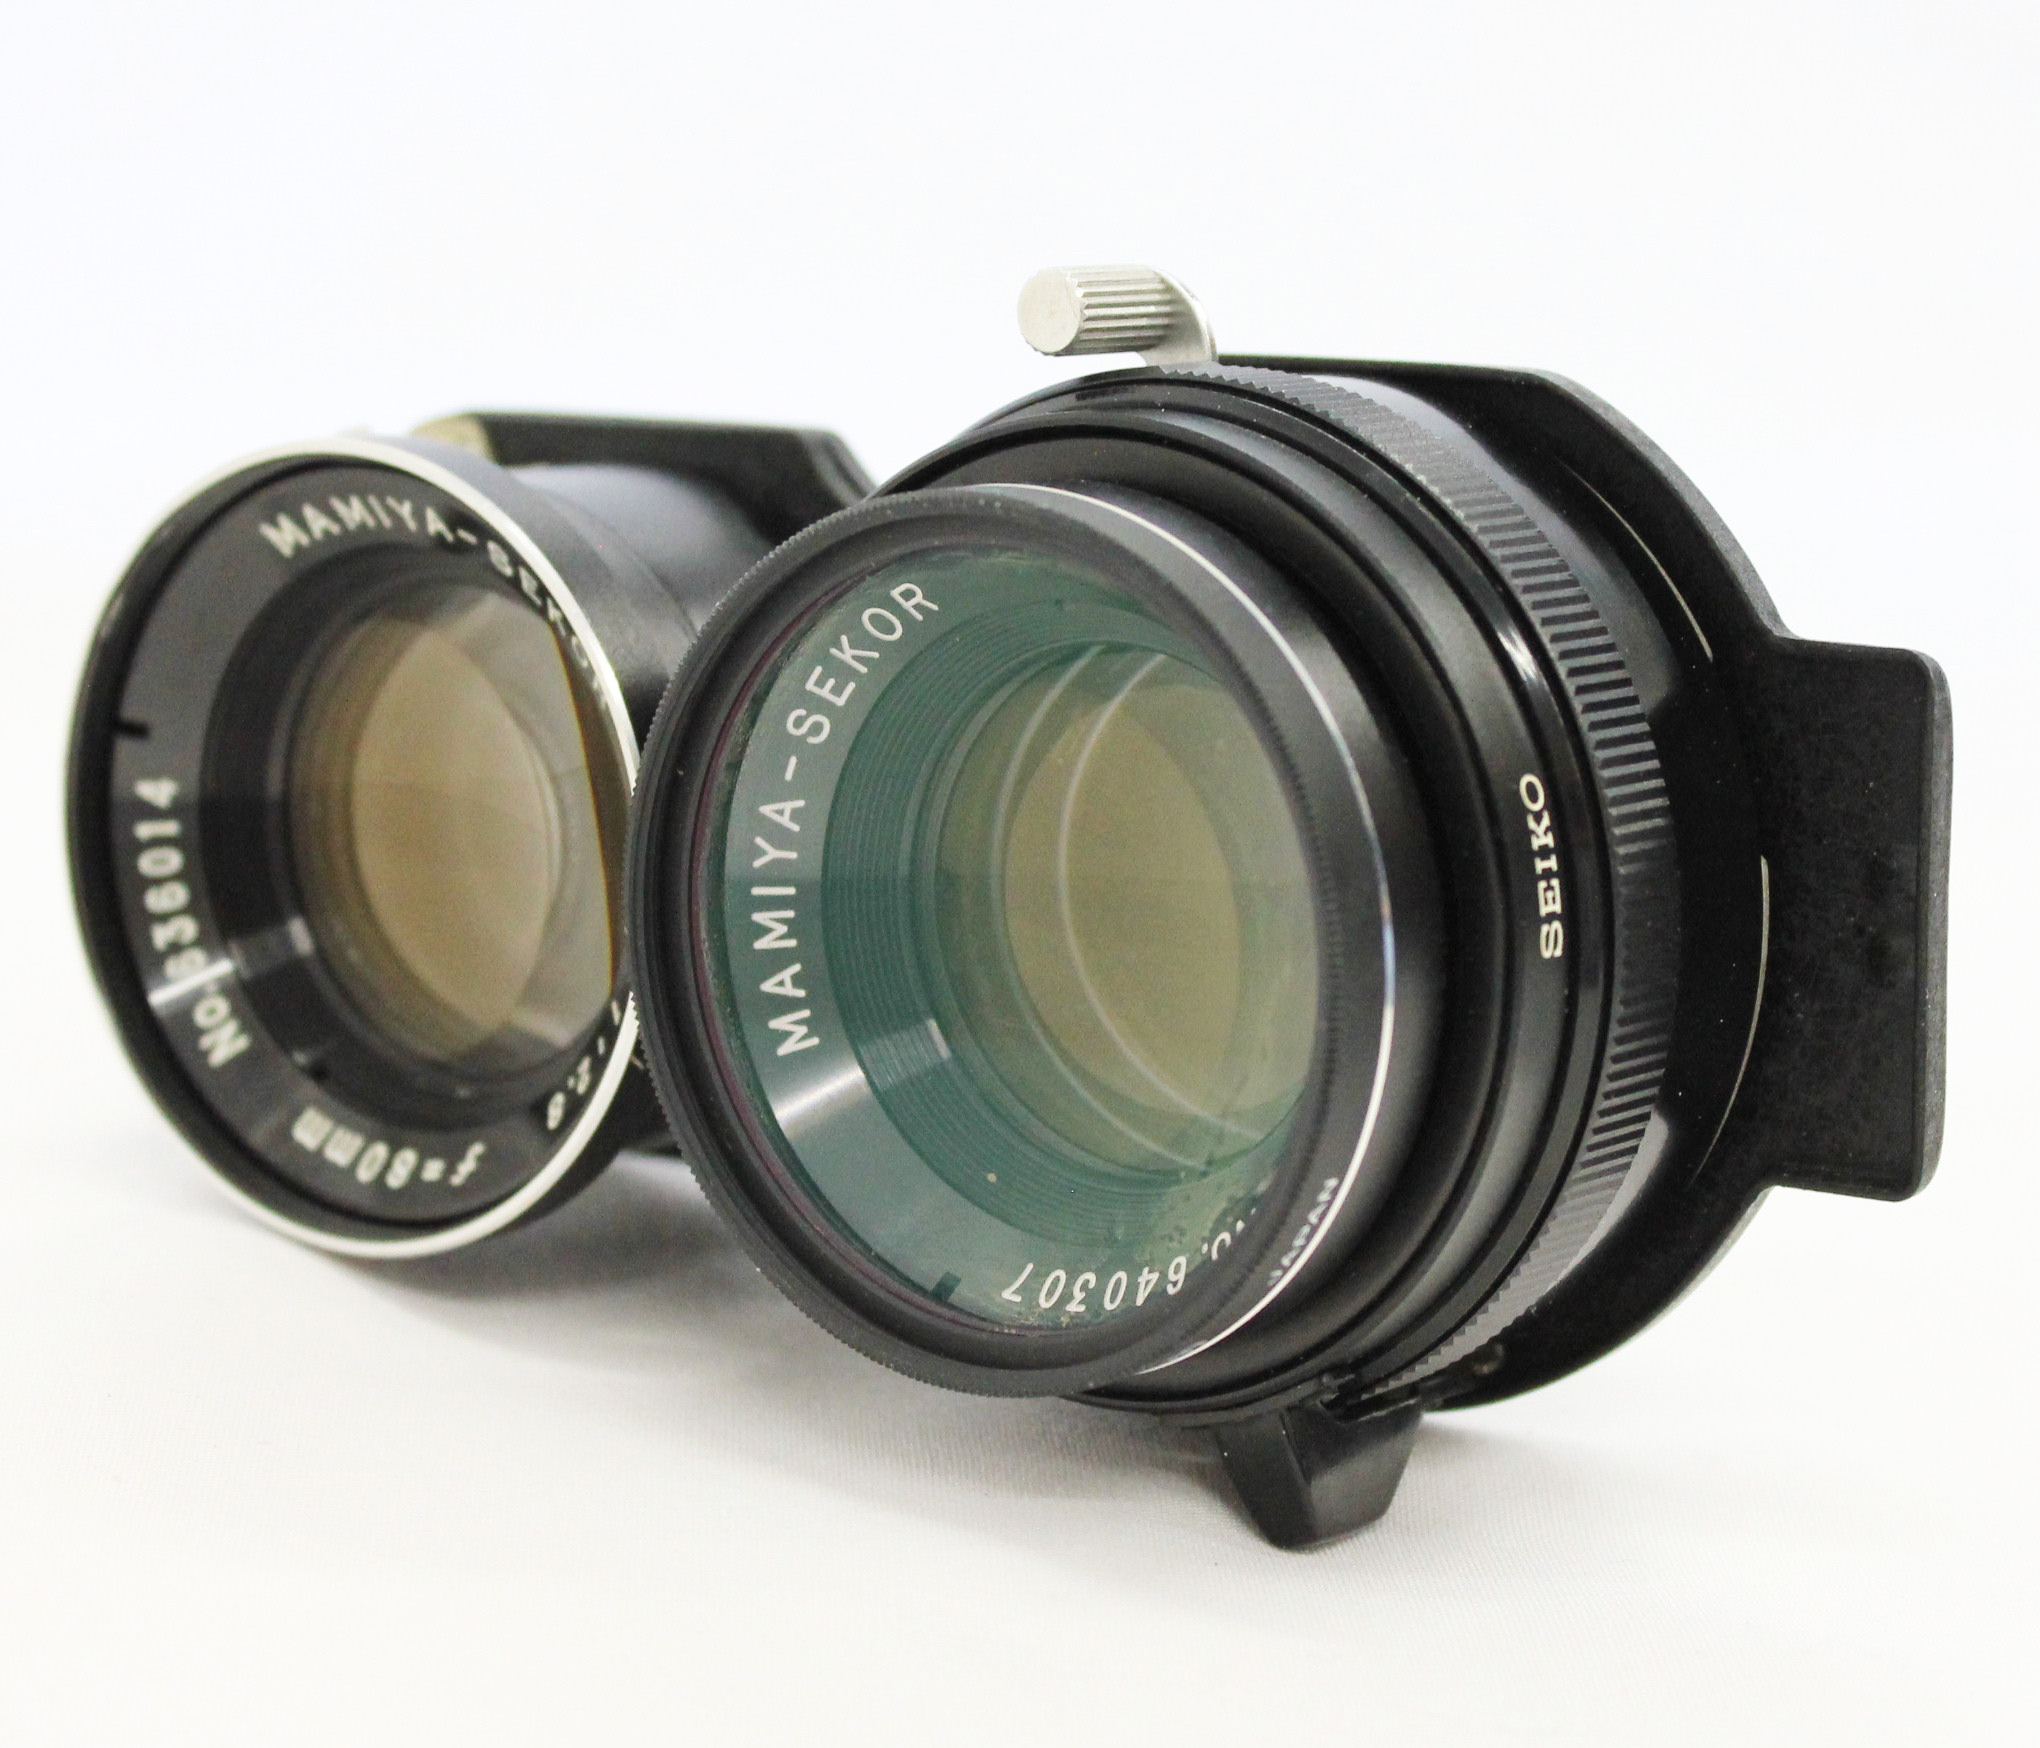  Mamiya C220 Pro TLR Medium Format Camera with 80mm F2.8 and CdS Magnifying Hood from Japan Photo 11